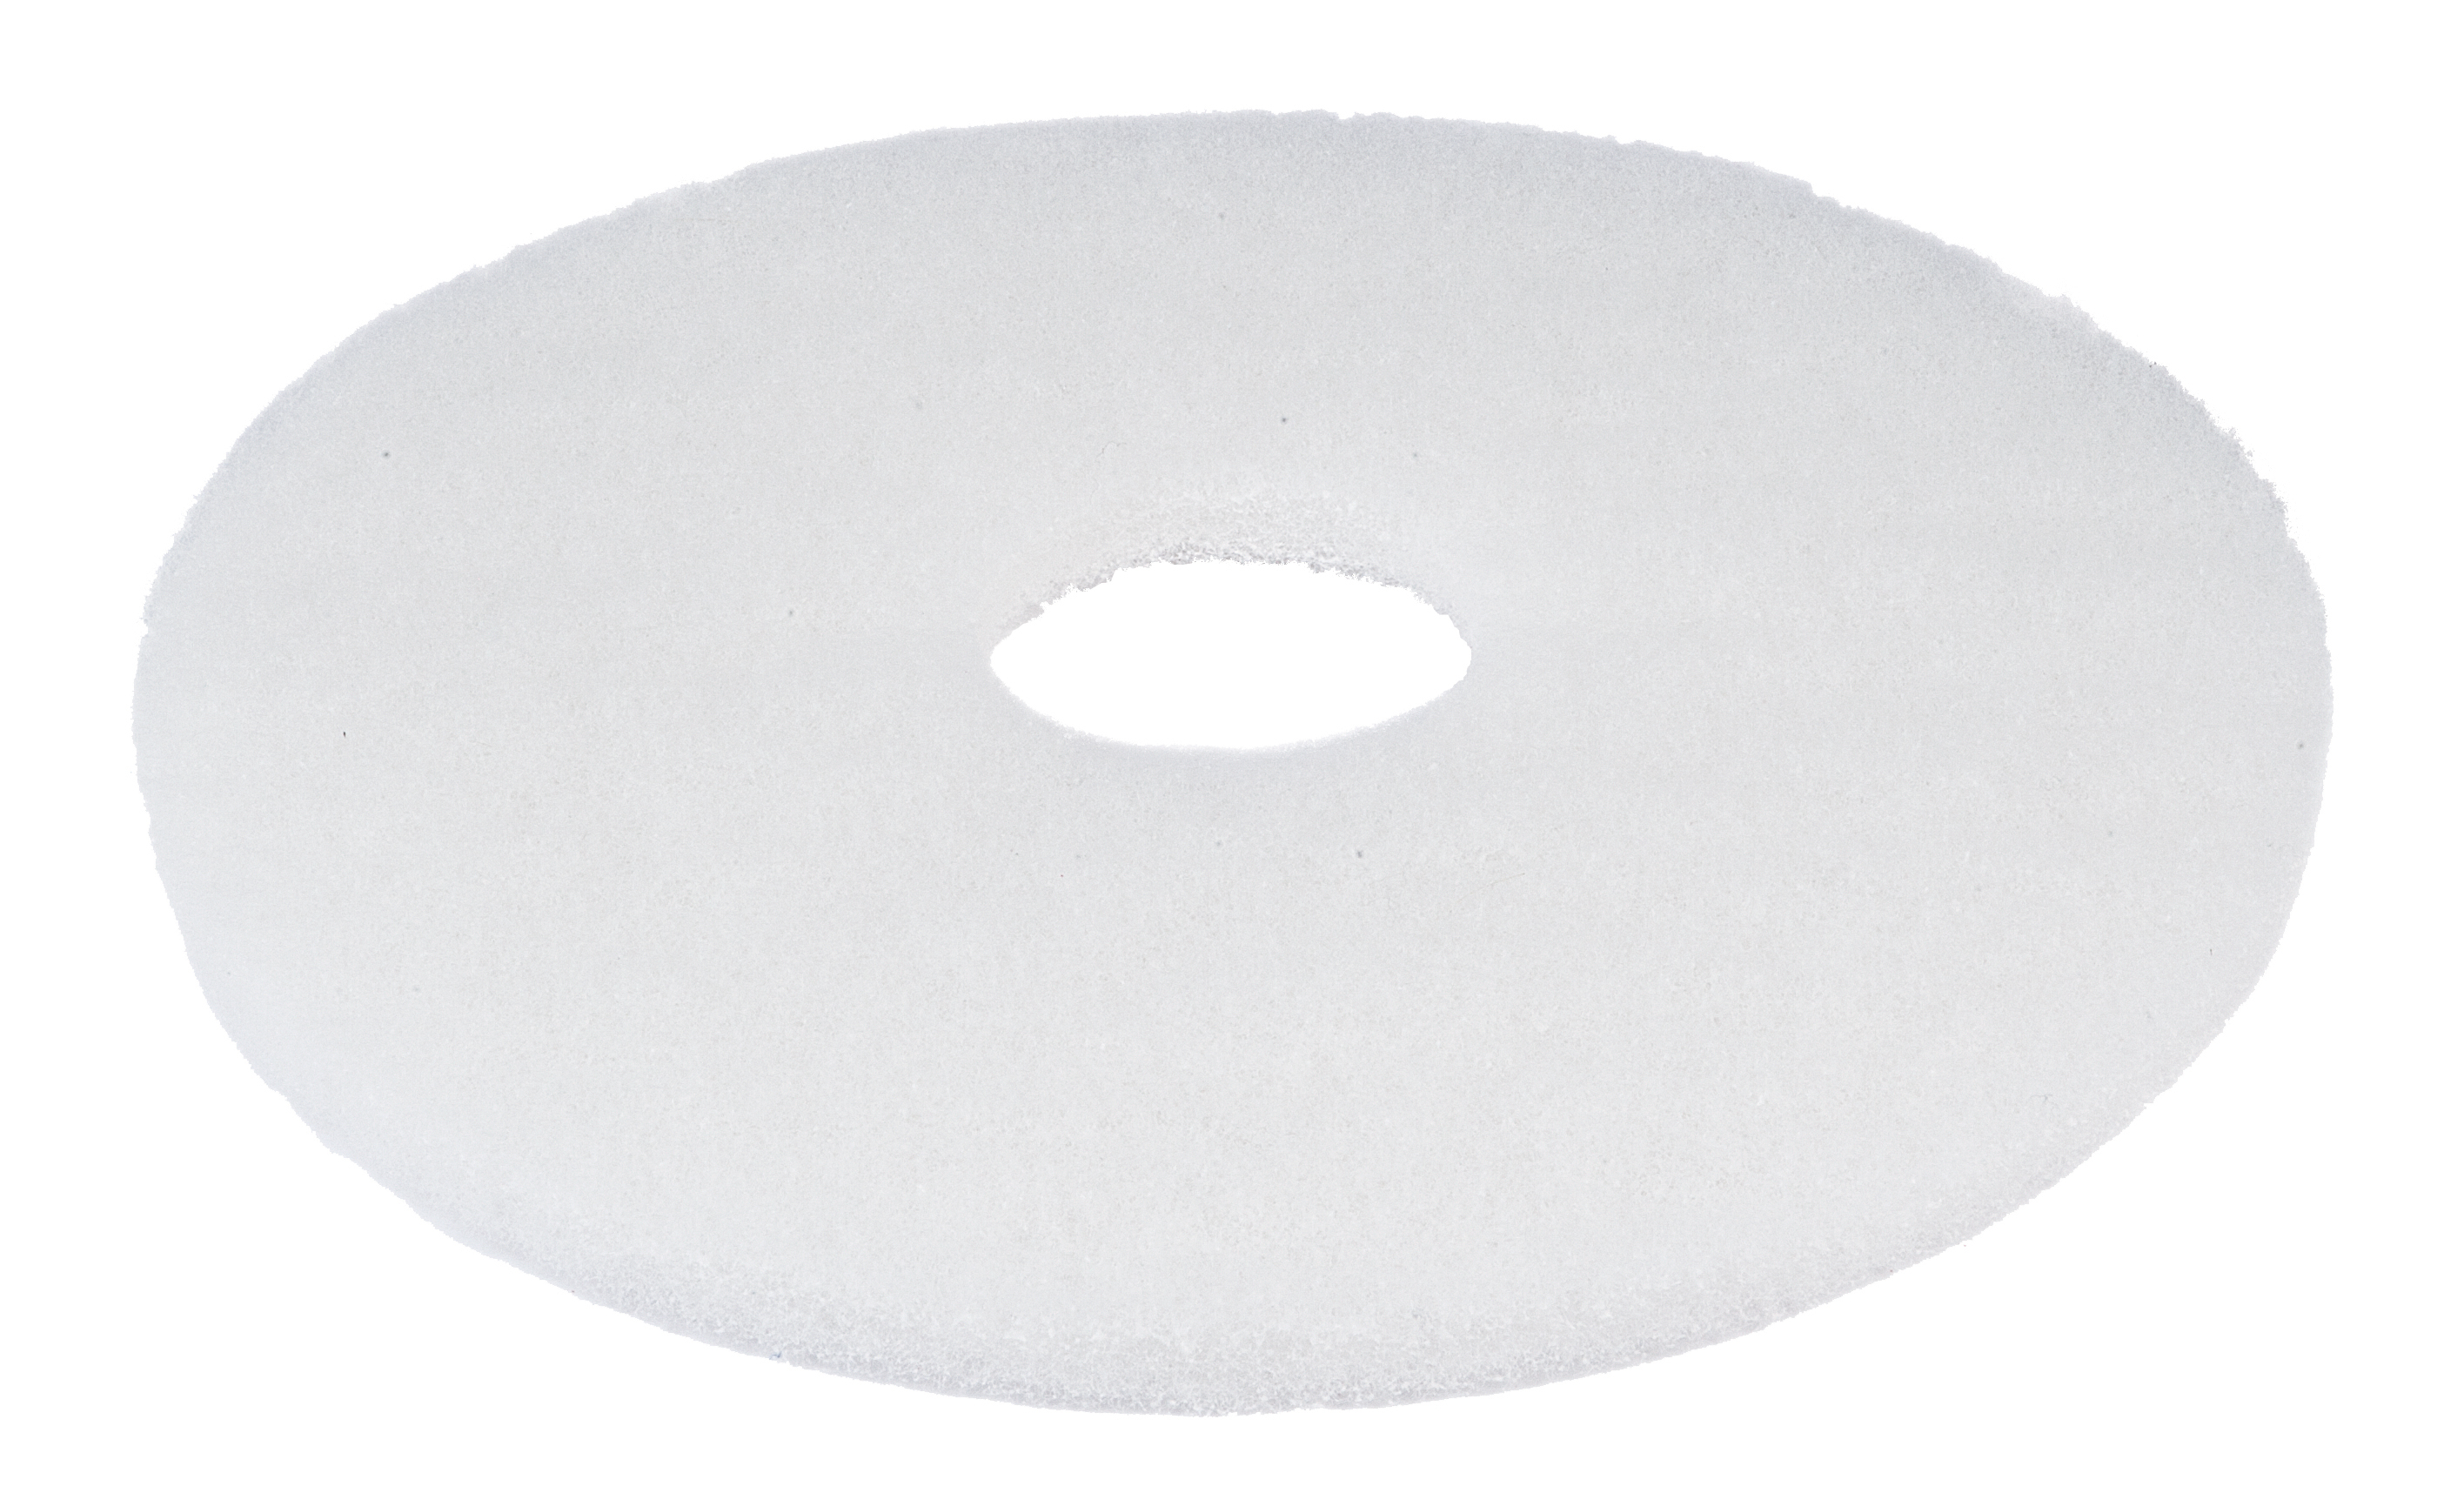 Superpad Nylon, weiß, 20 mm dick, 17 Zoll